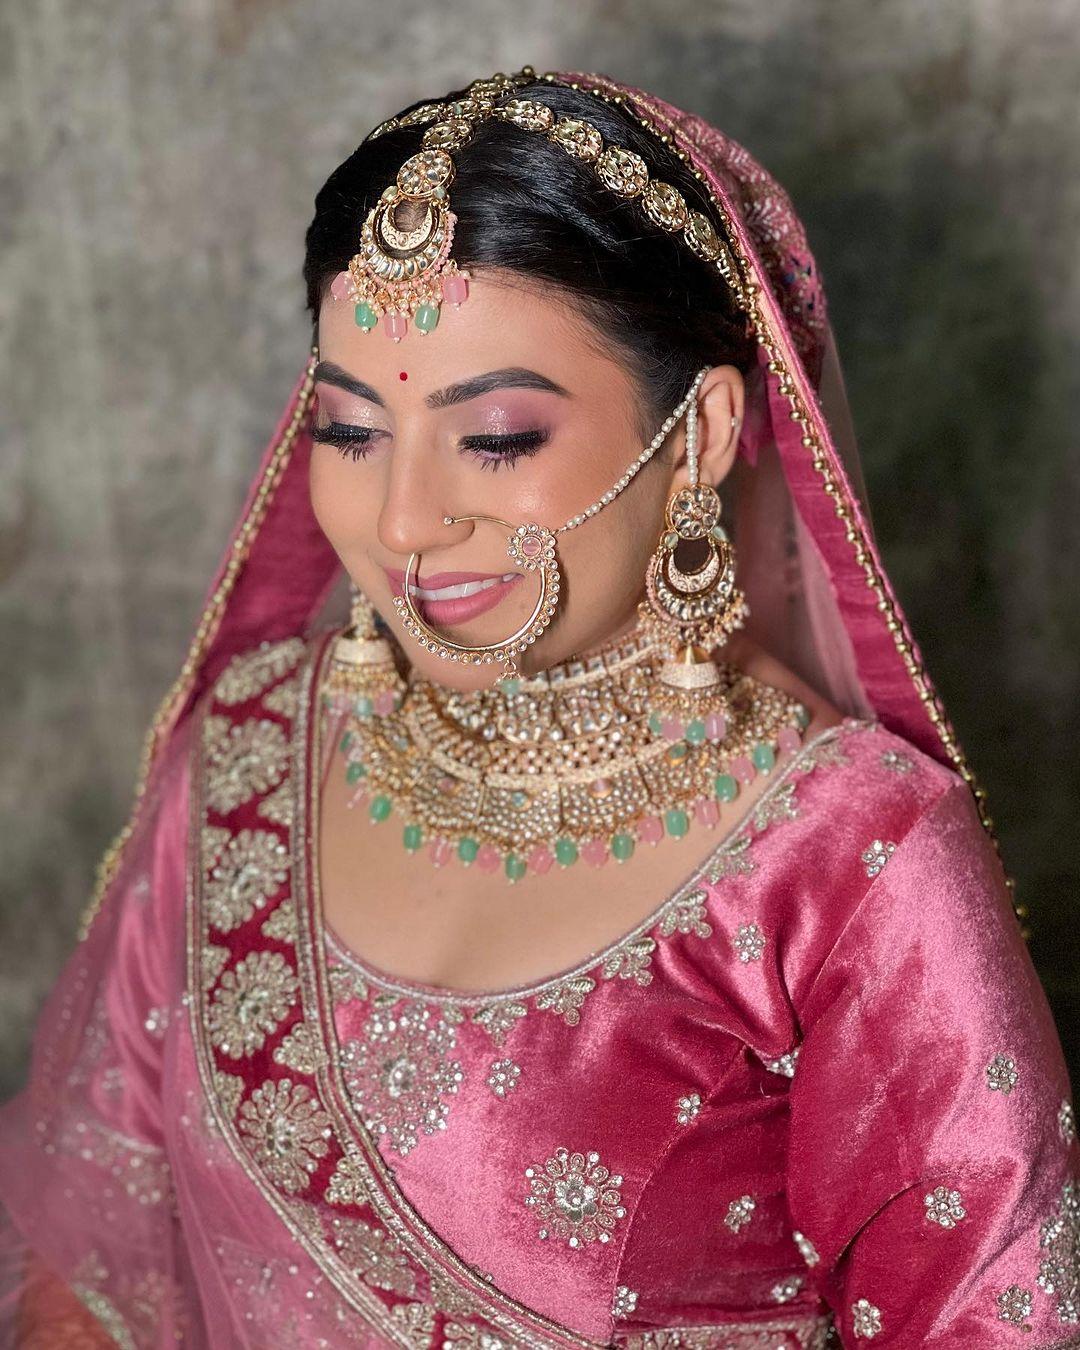 class="content__text"
 B R I D E 🌸 S H E F A L I 🤍

Makeup : @priyanshisonimua 

 #bride #bridalmakeup #bridalmakeupartist #indianbride #wedding #indianwedding #indianweddings #trending #minimalmakeup #naturalmakeup #dewymakeup #photo #photooftheday #bridalmakeuplook #trendingbrides #foryou #explore #explorepage #indianwear 
 